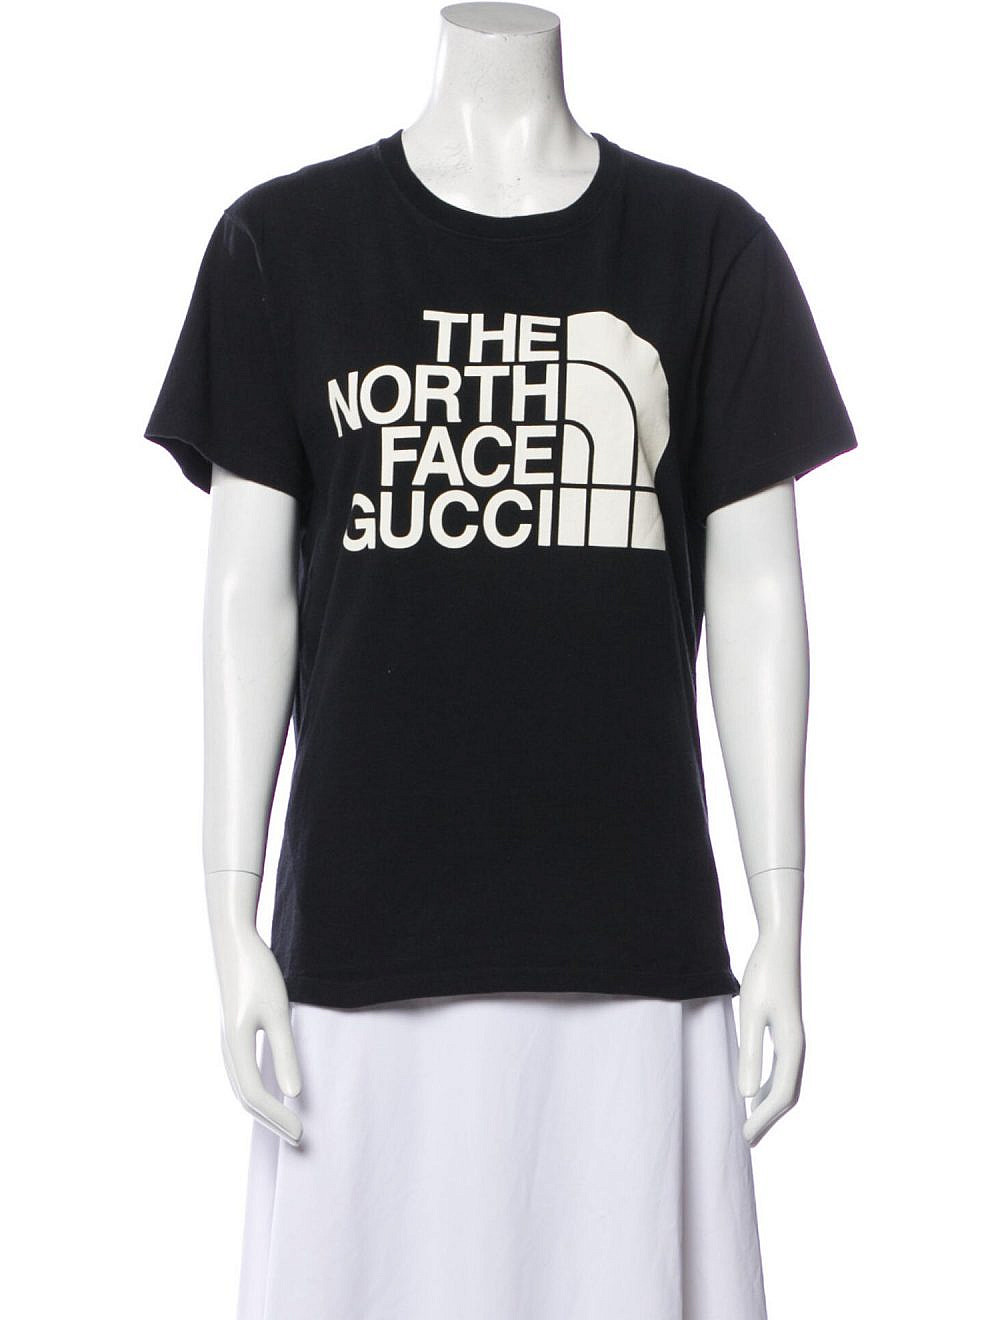 The North Face x Gucci. מחיר: 1,664 ש״ח באתר יד שנייה therealreal.com | צילום: האתר הרשמי